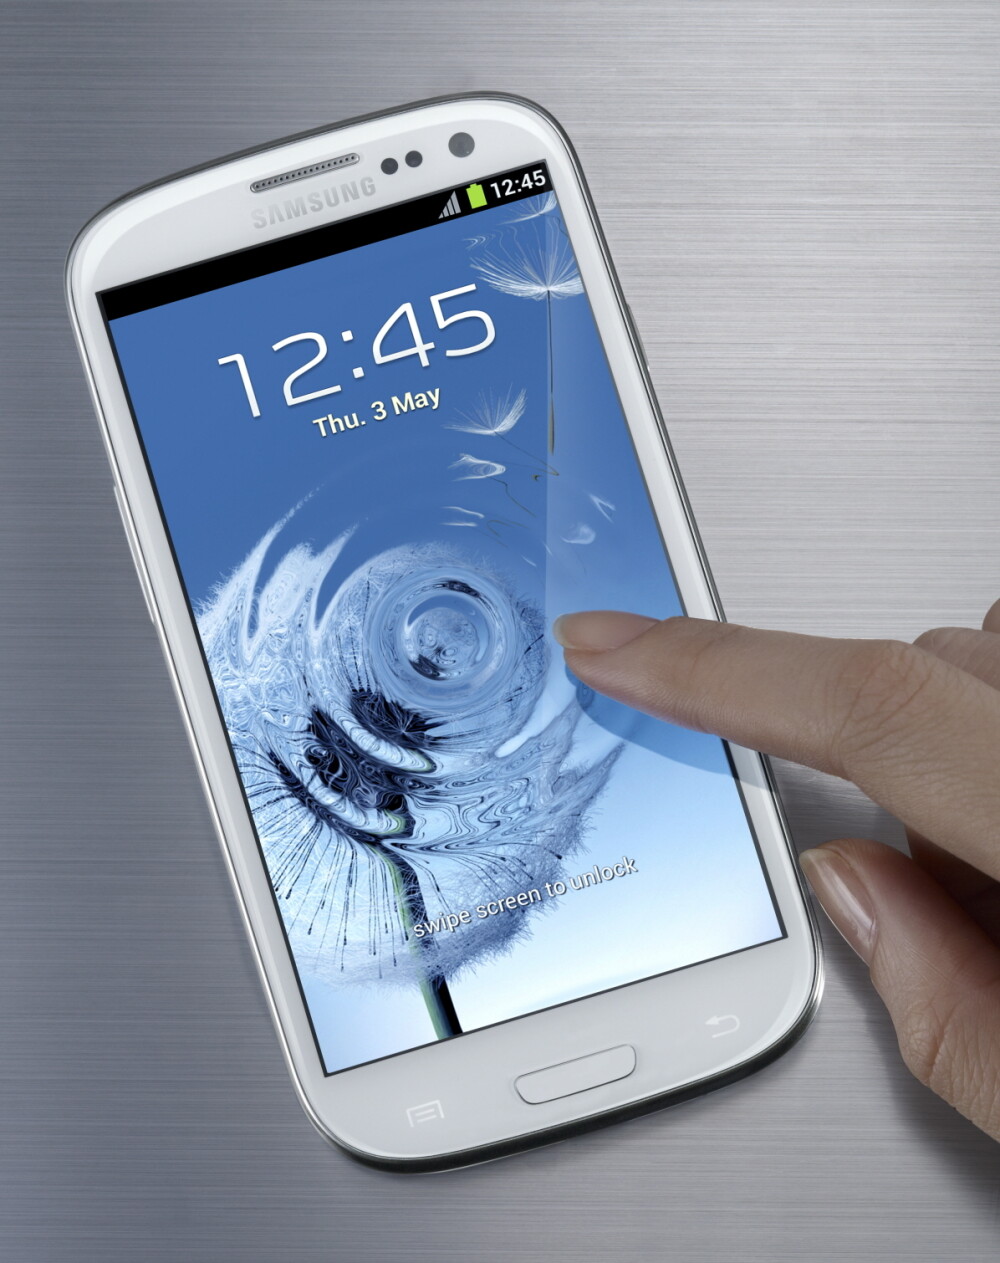 Samsung GALAXY S III - specificatii tehnice complete, noi functionalitati si GALERIE FOTO - Imaginea 8